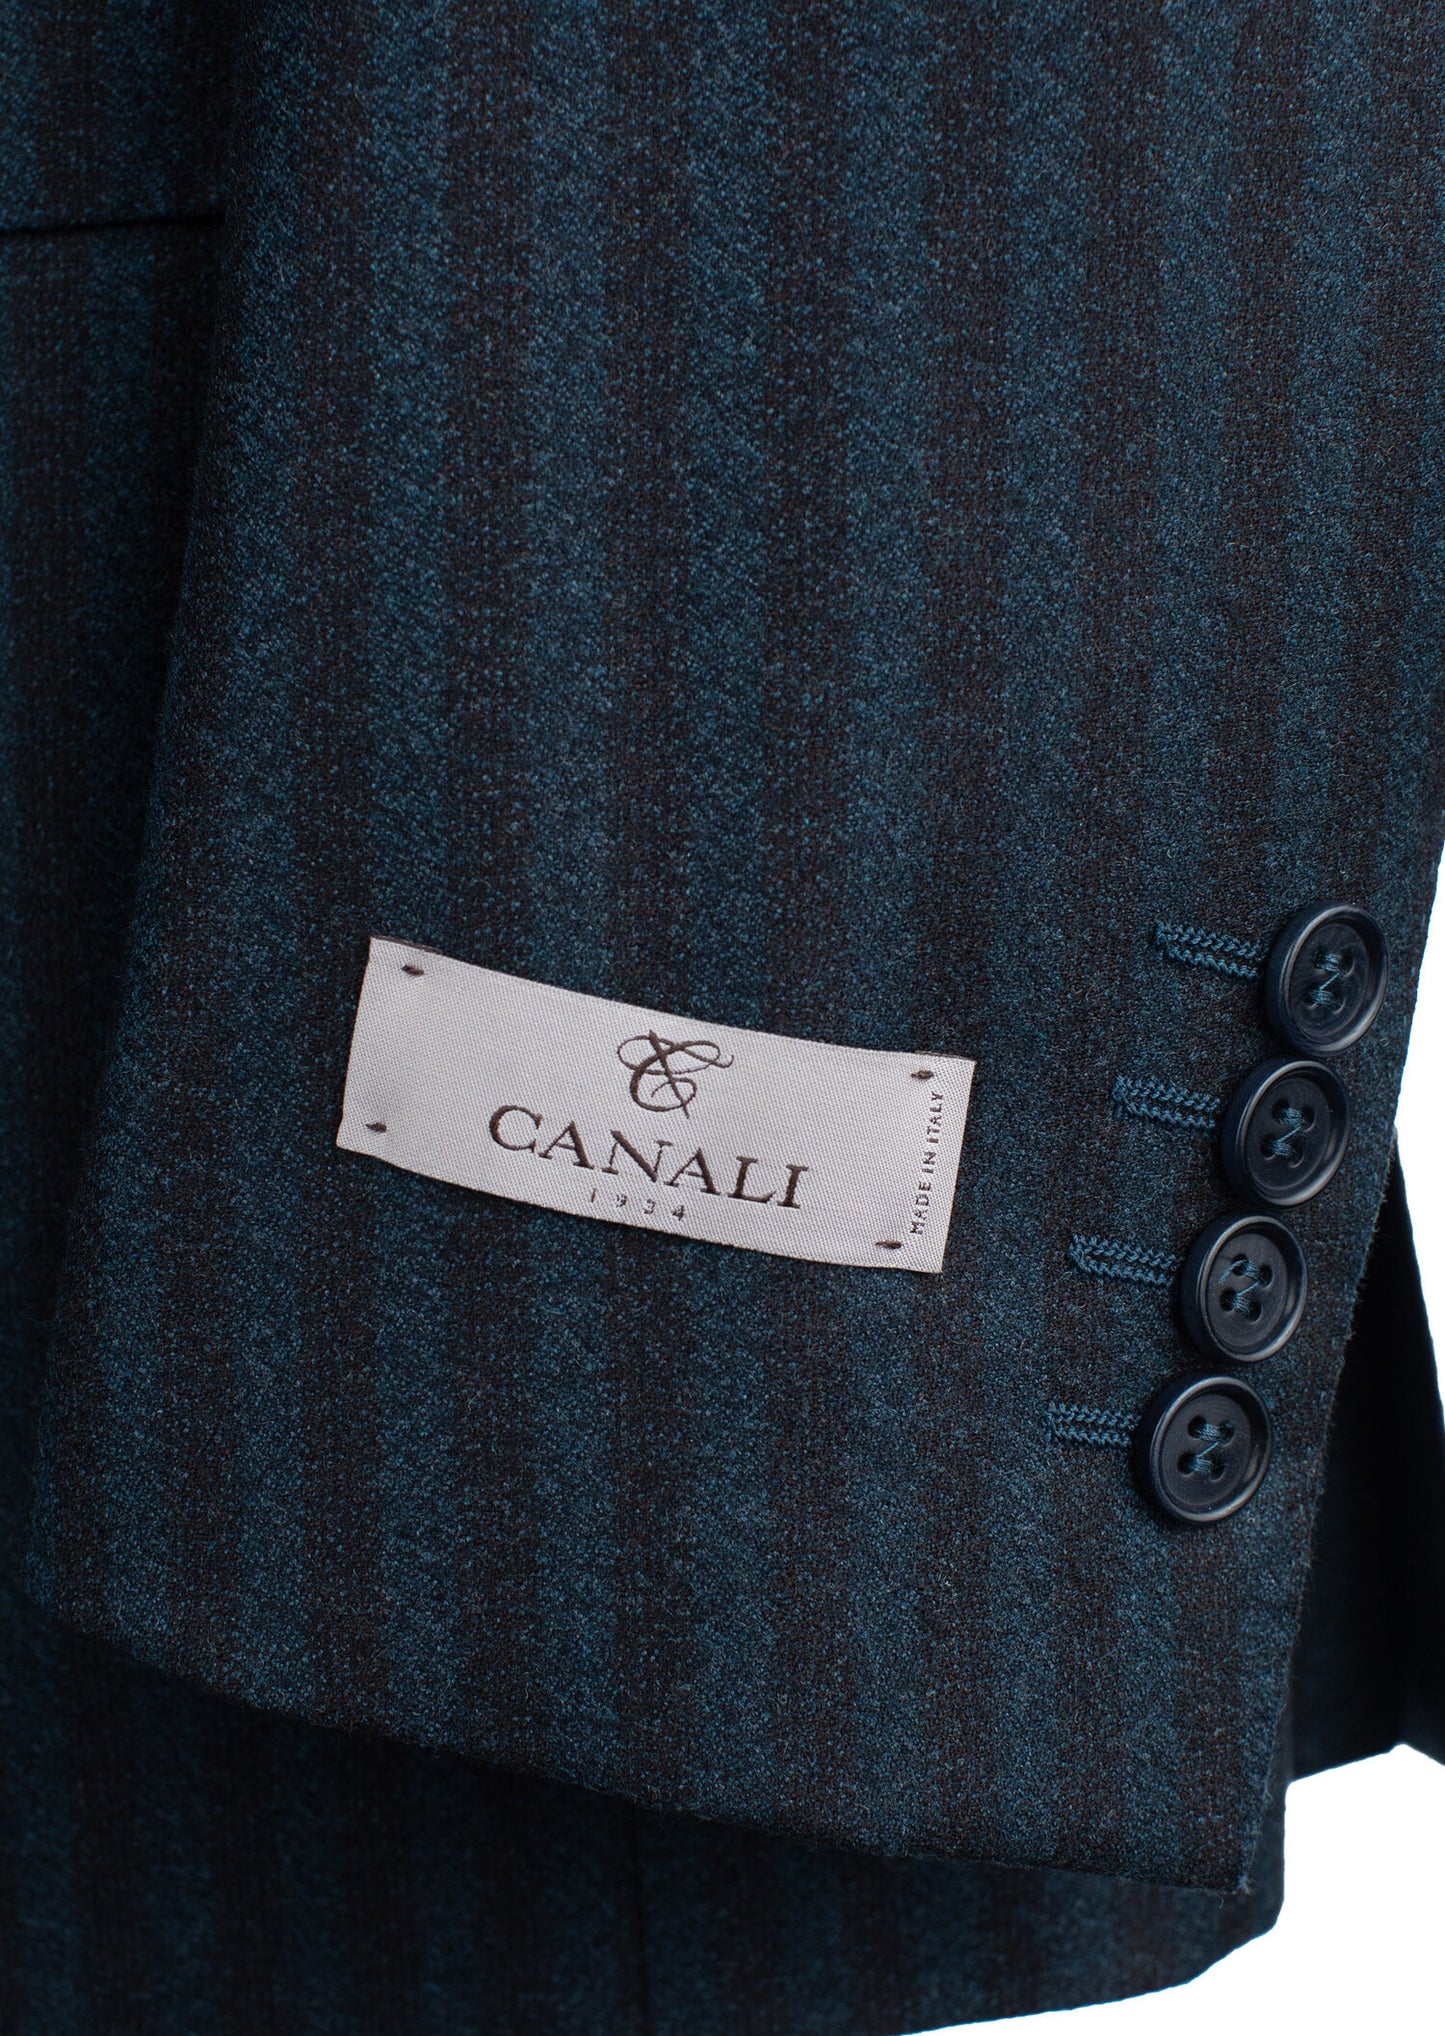 Canali Siena Model Suit with Peak Lapel in Green & Brown Pinstripe